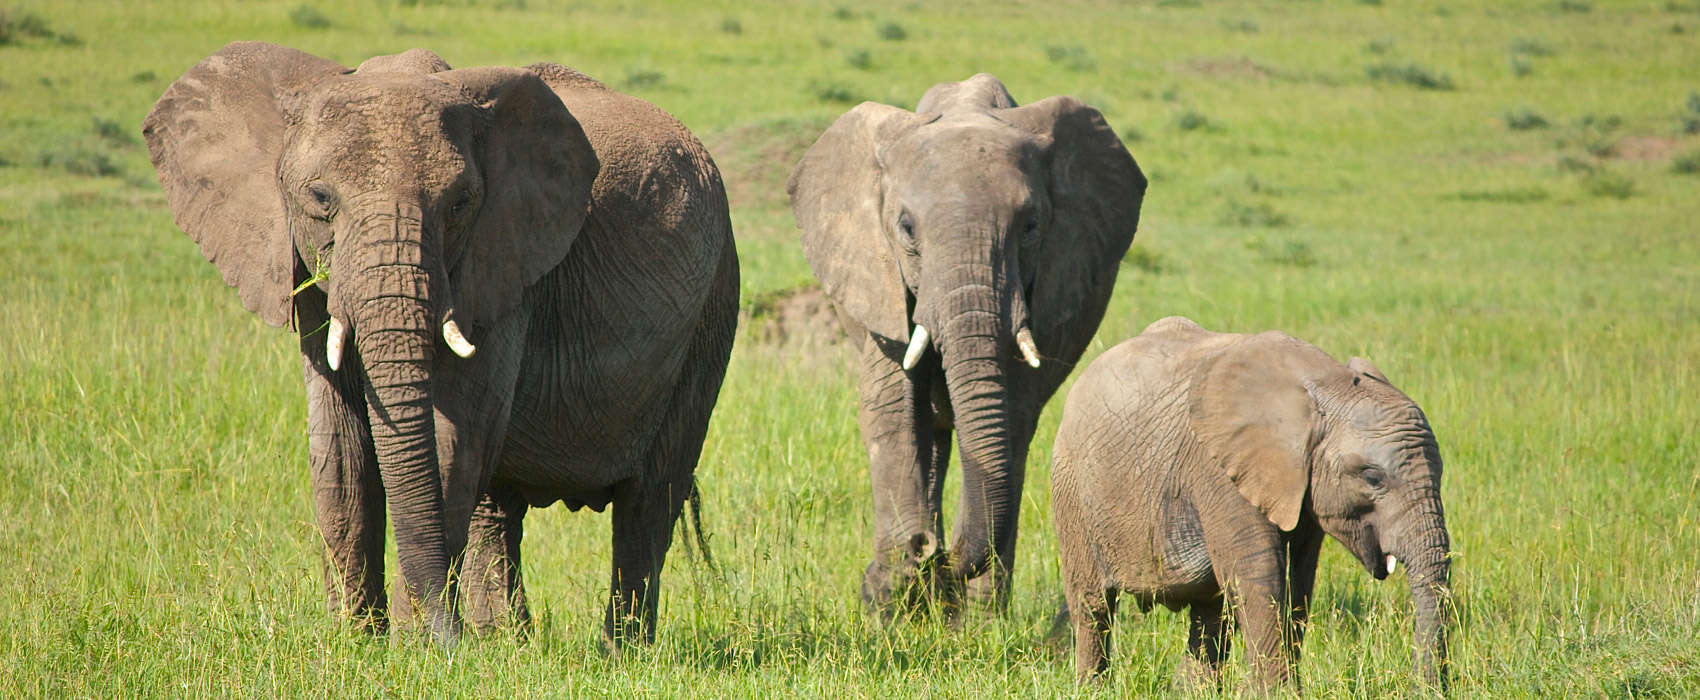 African Serengeti National Park Safari elephants